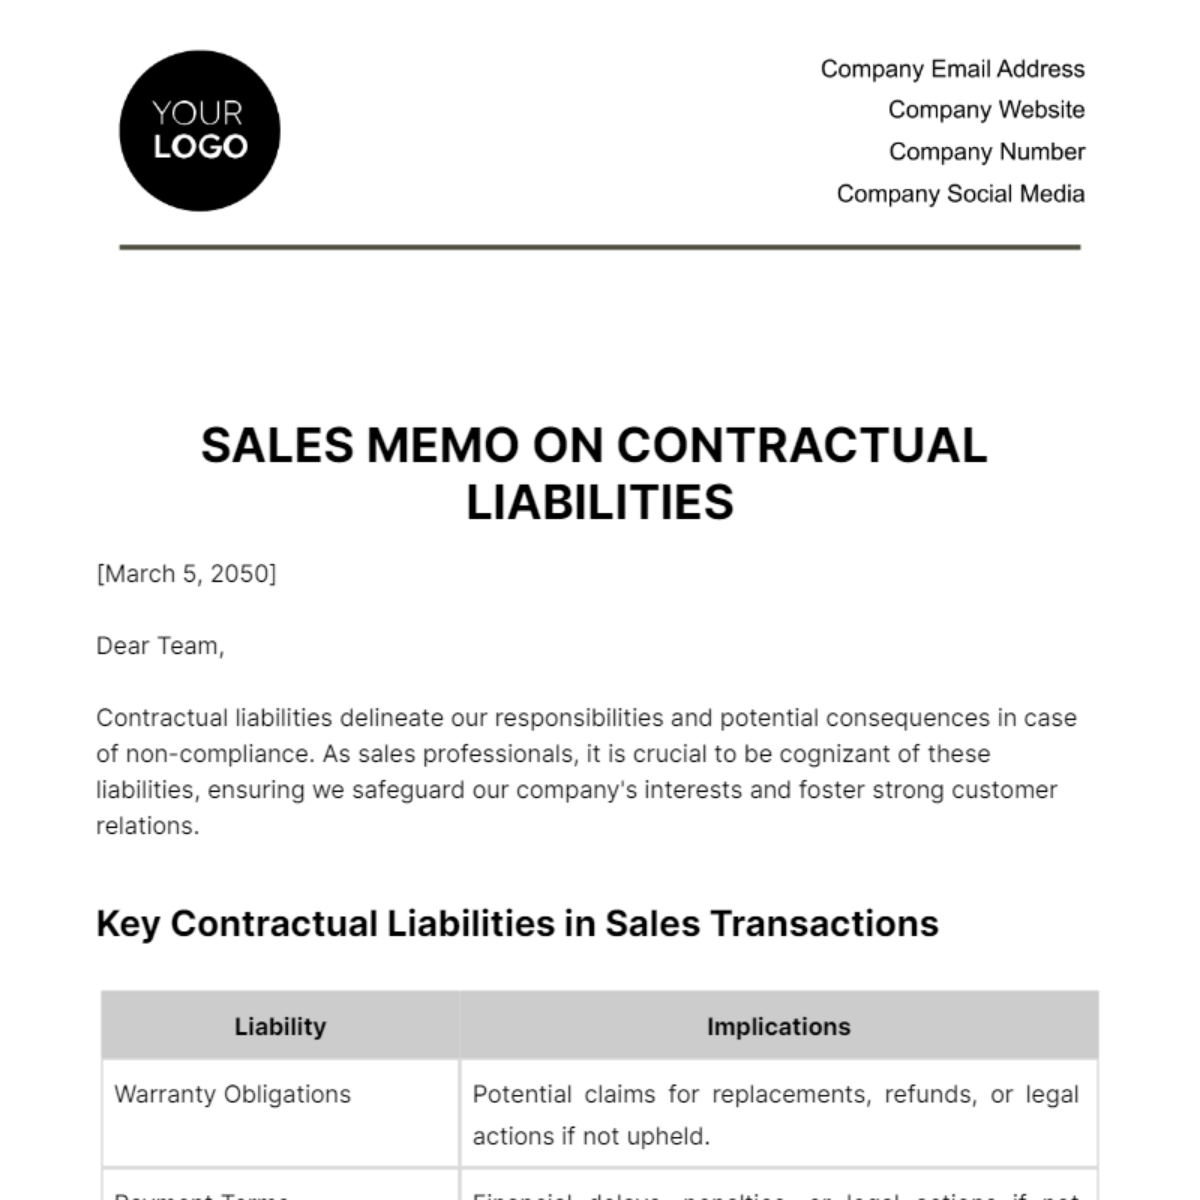 Sales Memo on Contractual Liabilities Template